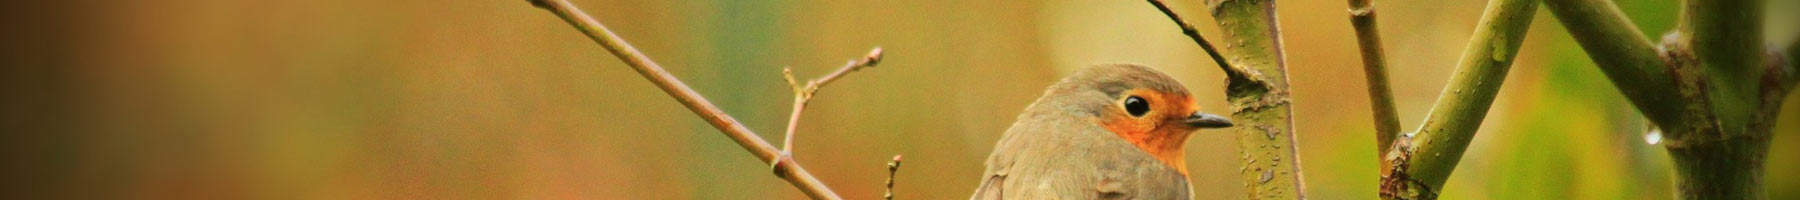 An English robin sitting on a branch